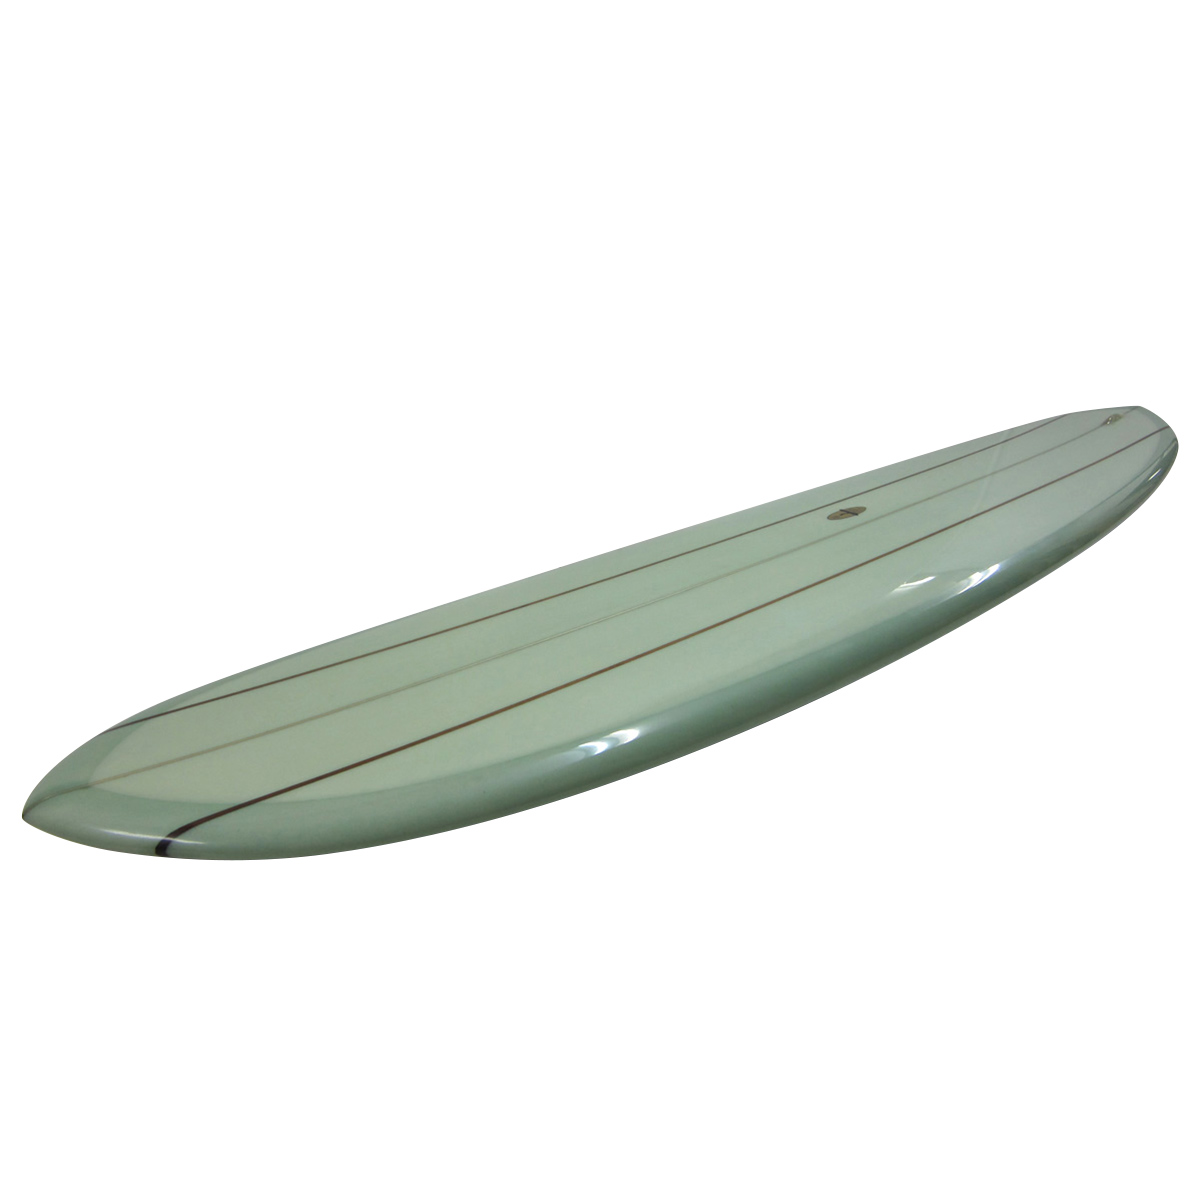 KI Surfboards / Granpa Round Pin Custom 9`6